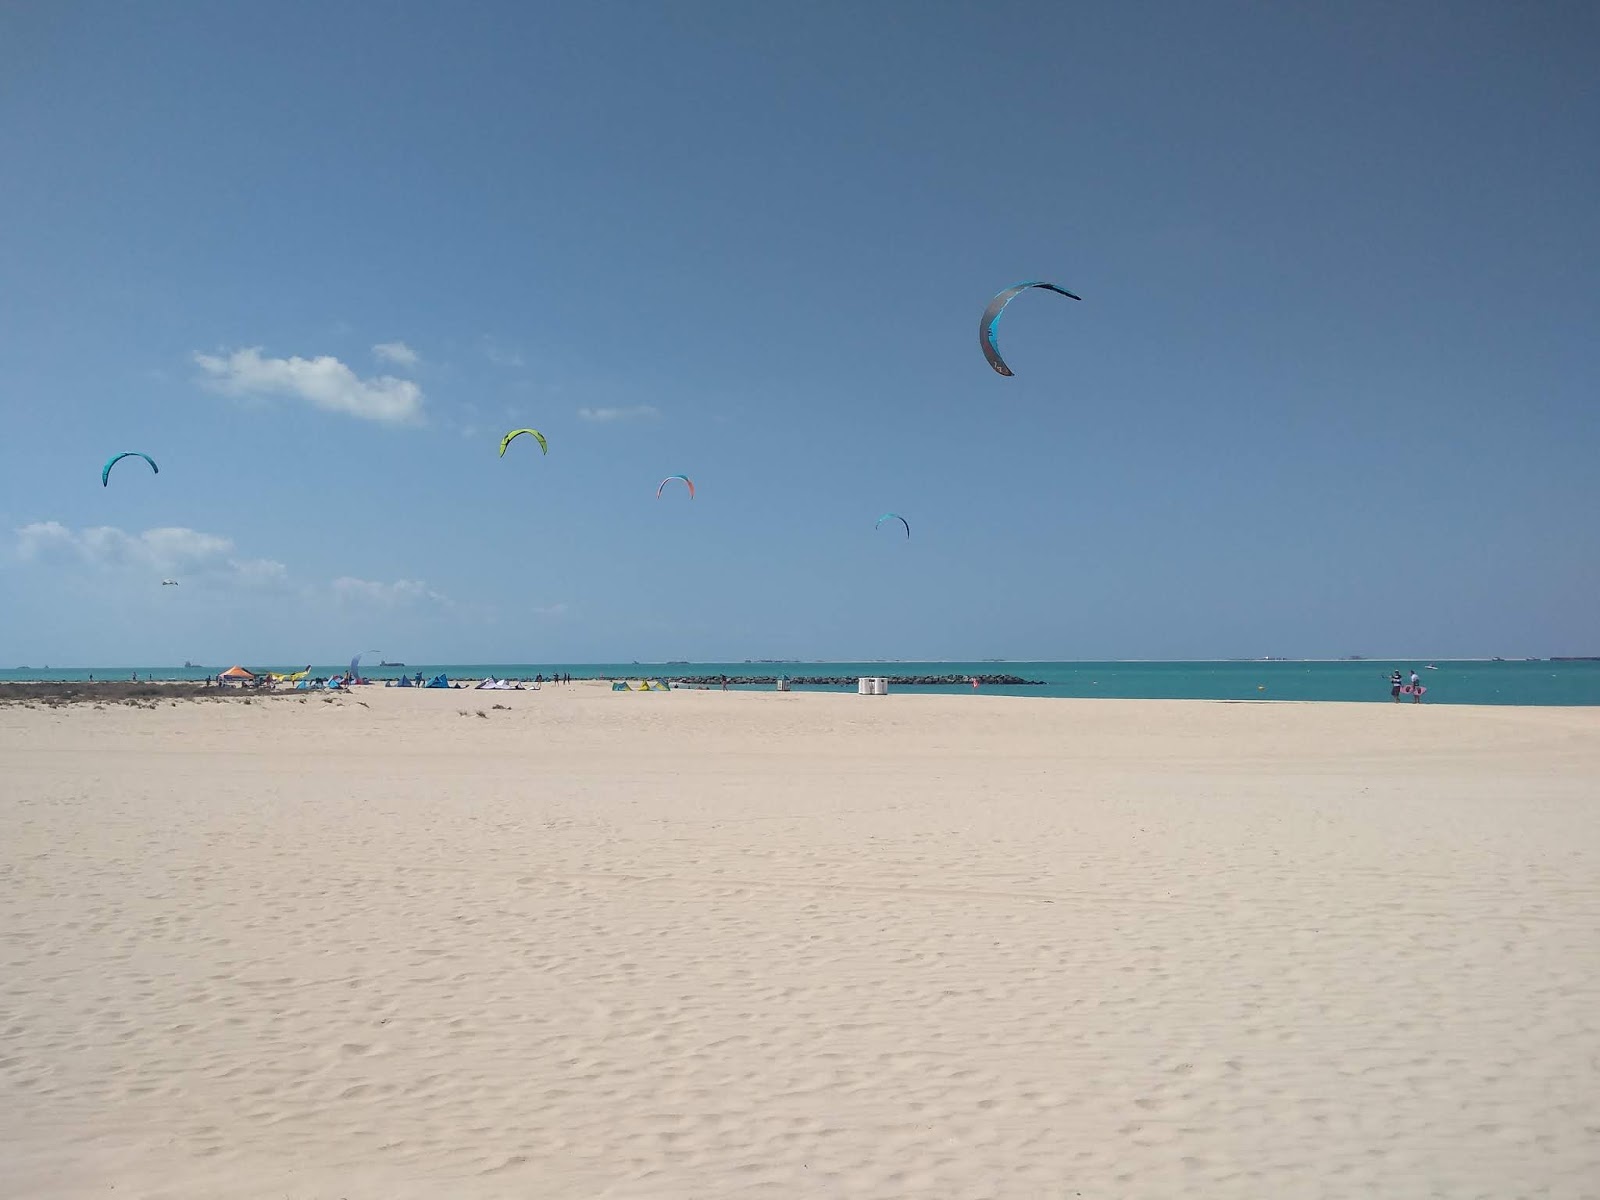 Zdjęcie Jumeirah Kite beach obszar udogodnień